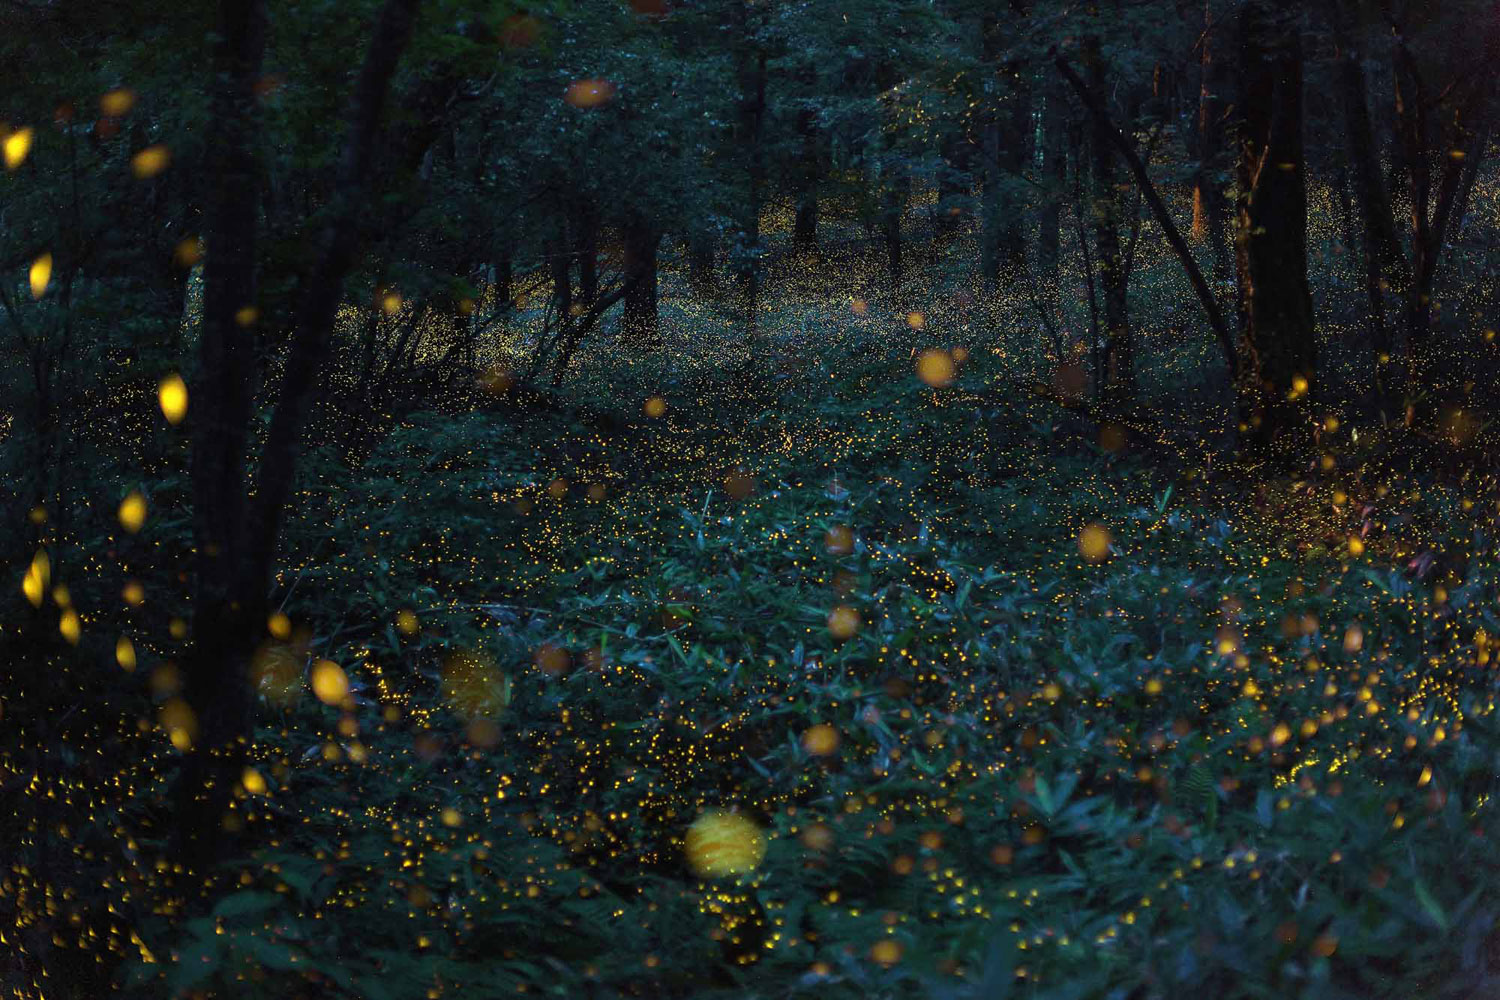 A flight of hime botaru fireflies (Hotaria parvula) or 'princess fireflies,' in the woods.